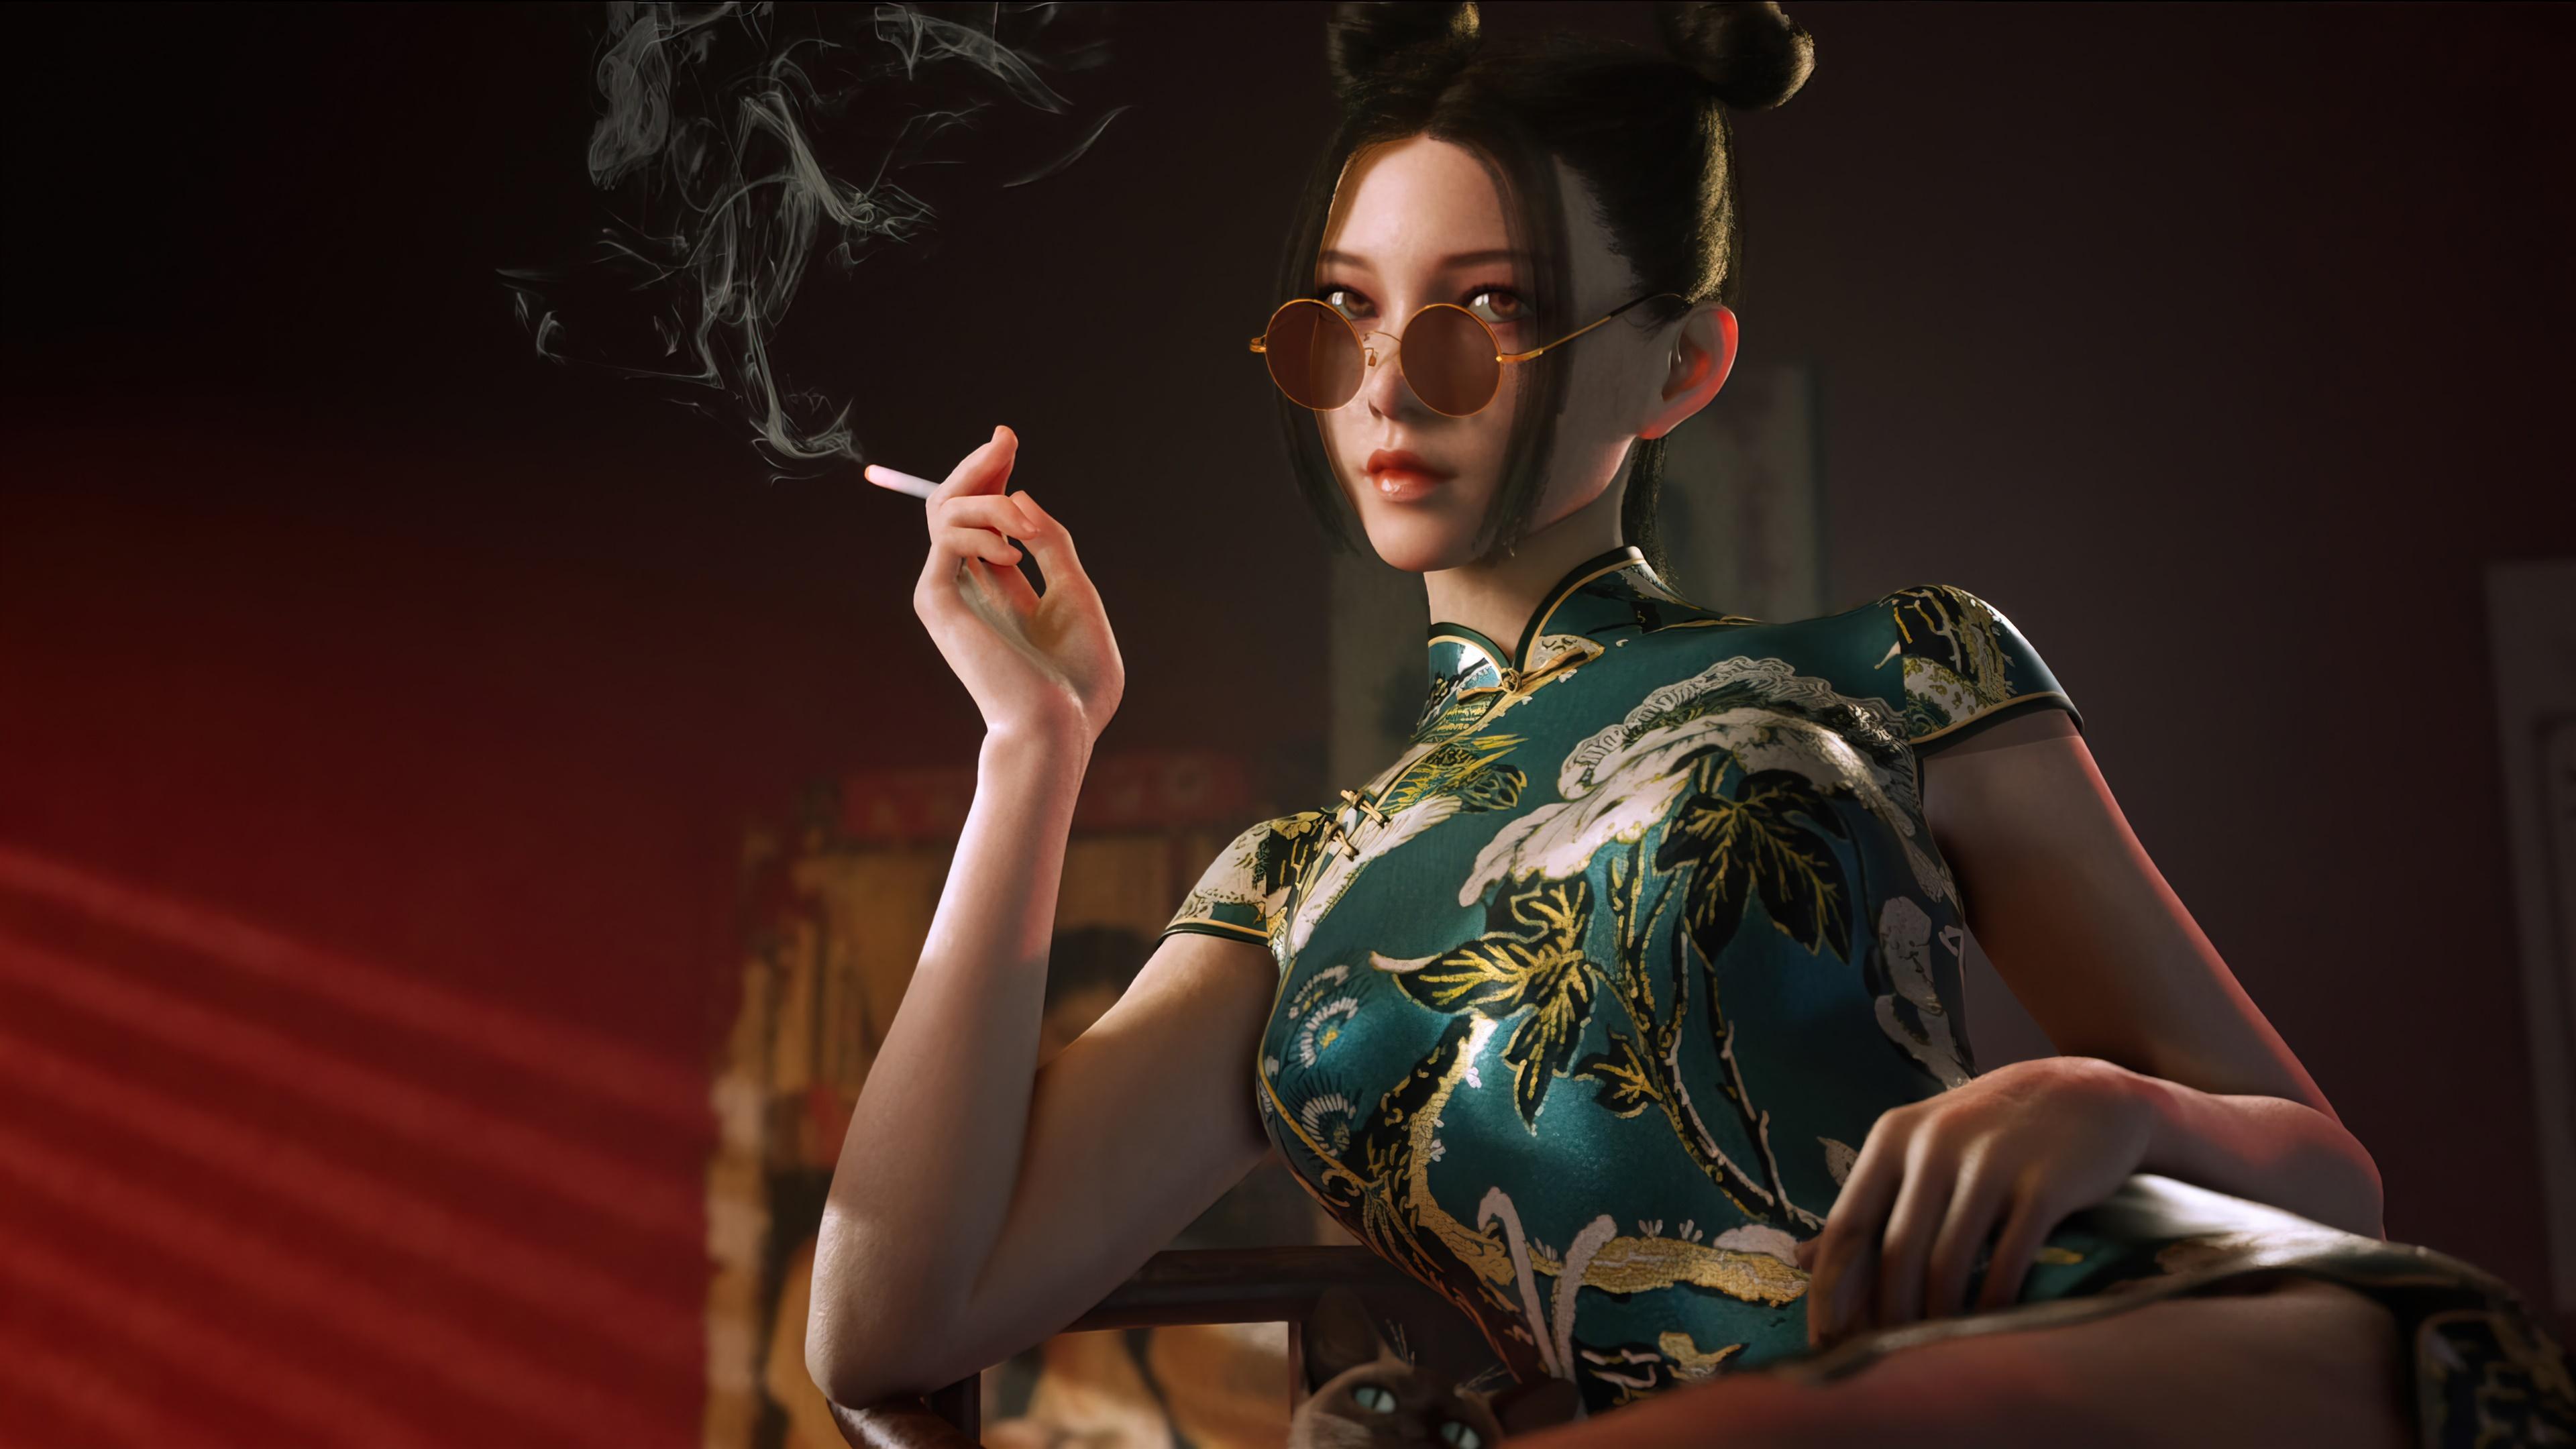 HD wallpaper, Pc, Girl, Smoking, Digital Art, 4K